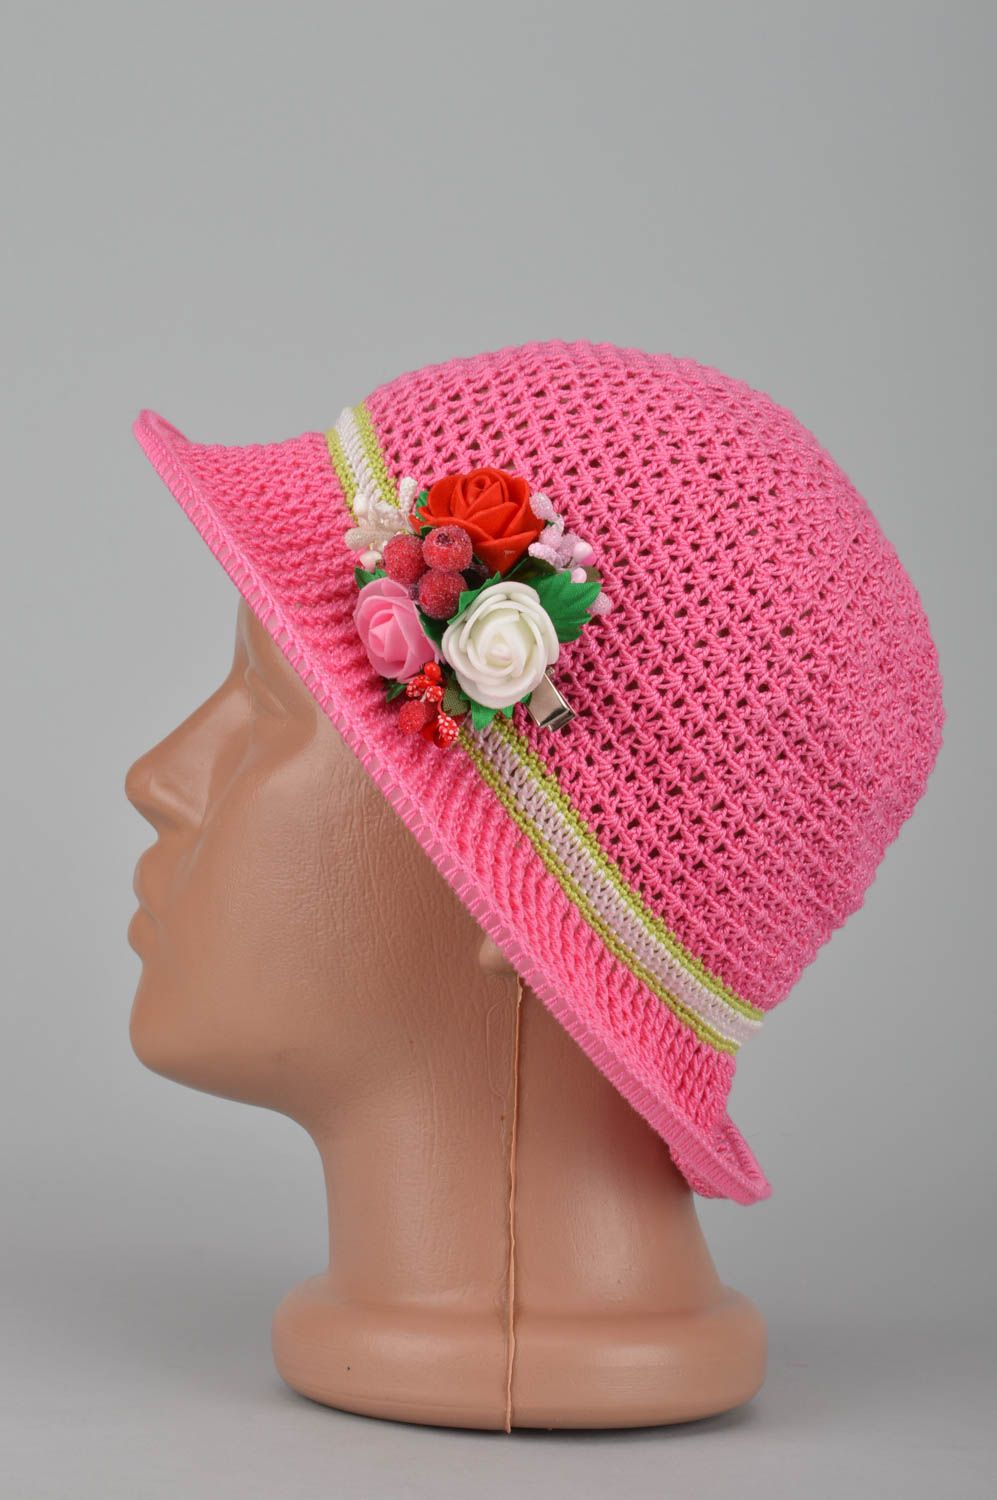 Beautiful handmade crochet hat fashion accessories cute hats crochet ideas photo 3